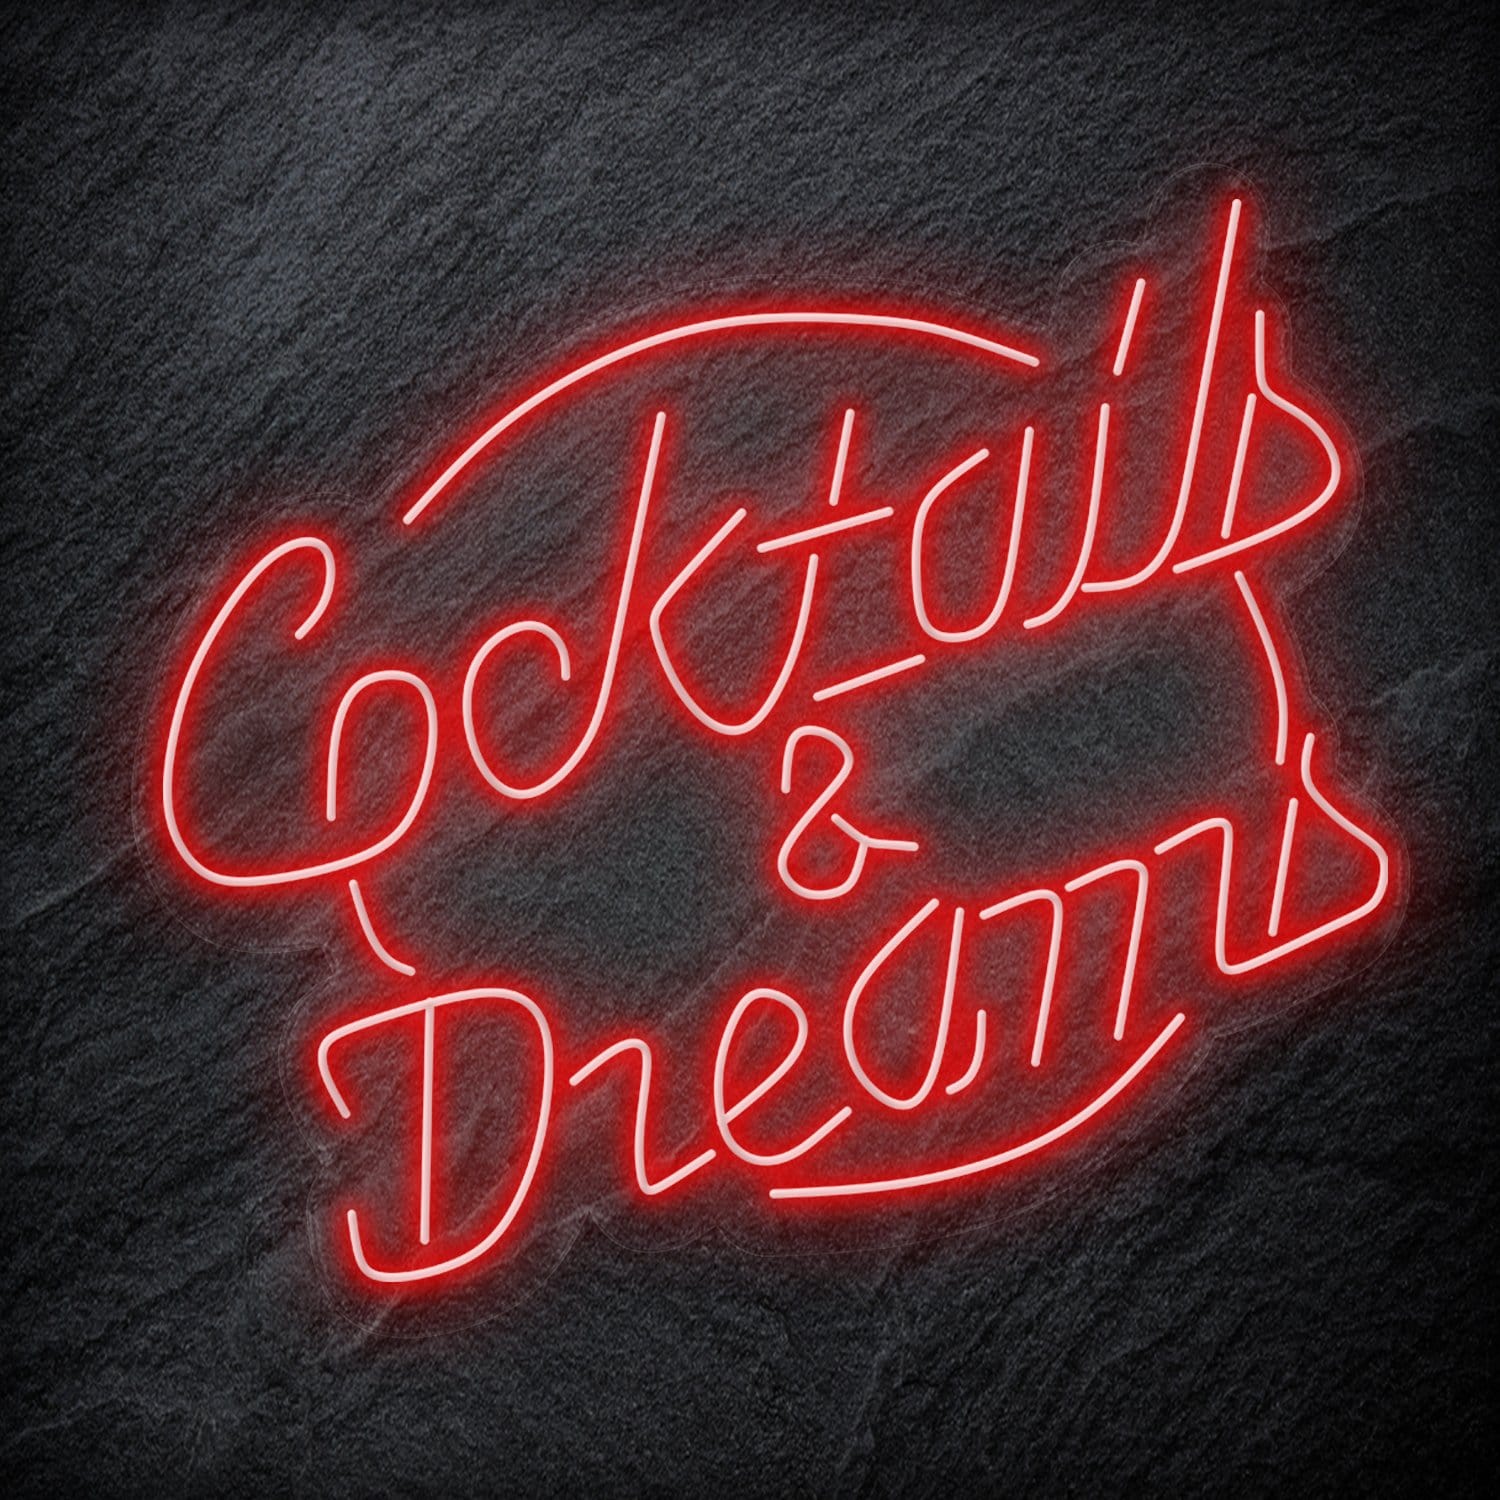 "Cocktails & Dreams" LED Neonschild Schriftzug Sign - NEONEVERGLOW